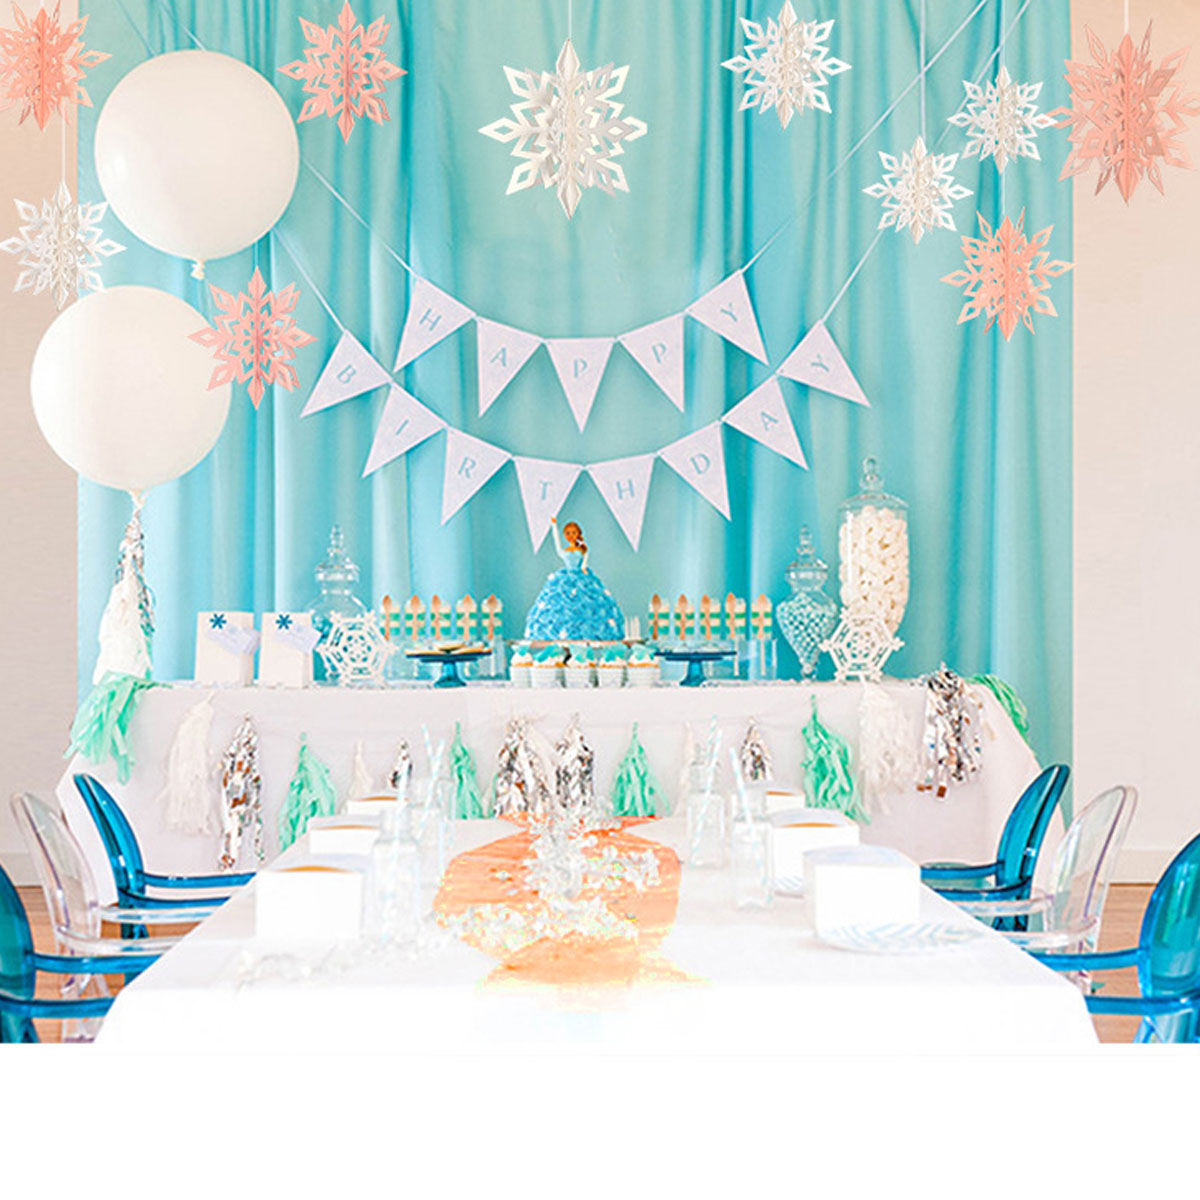 6pcs-Christmas-Party-Hanging-Decoration-Baubles-Xmas-Snowflakes-Home-Bar-Decor-1744746-11